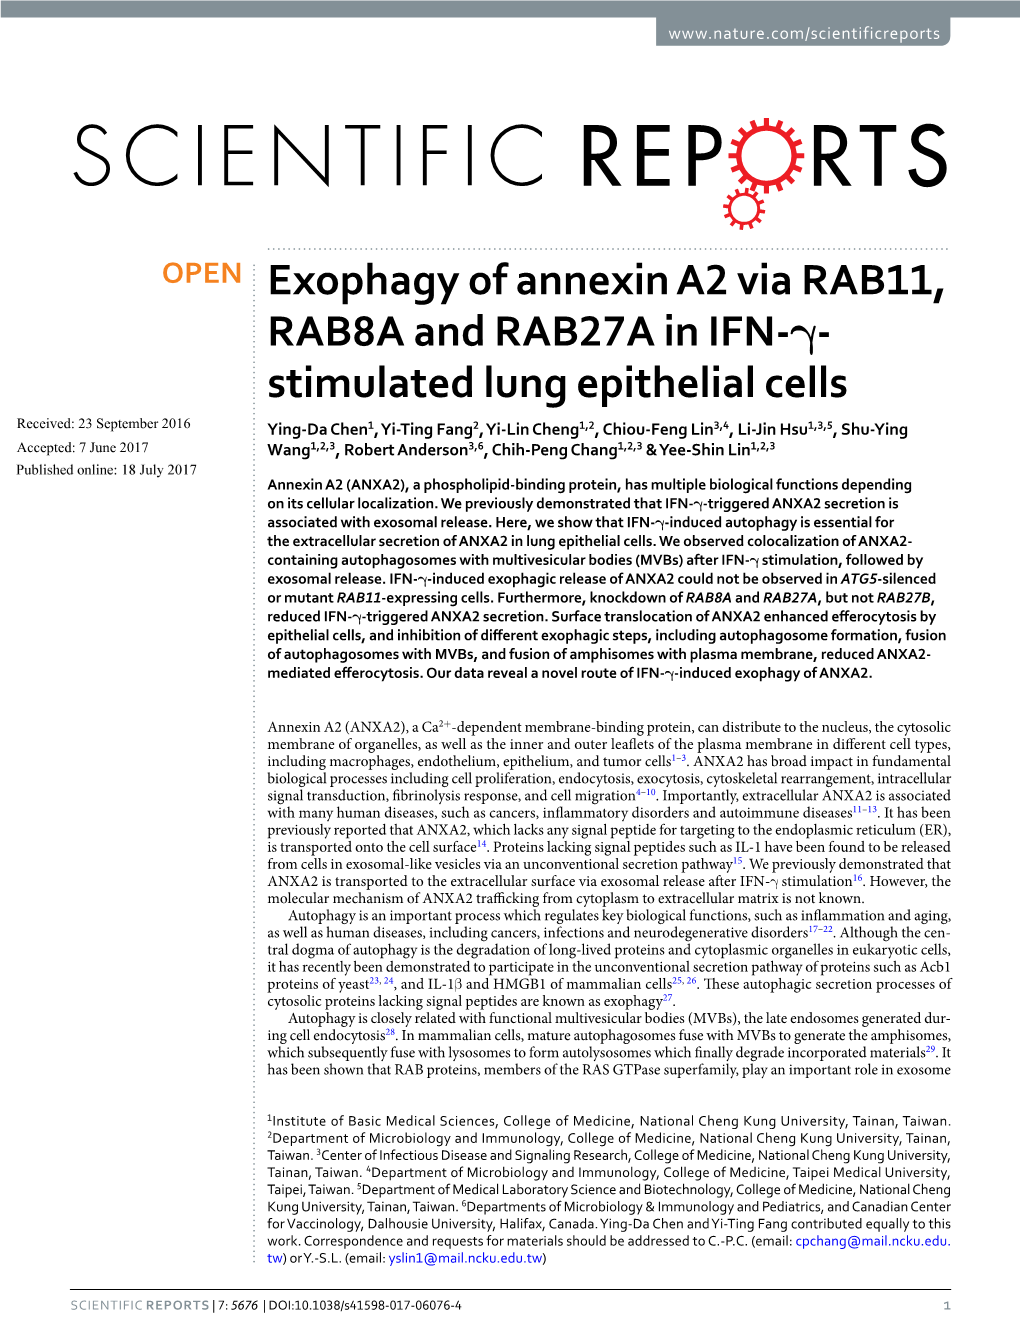 Exophagy of Annexin A2 Via RAB11, RAB8A and RAB27A in IFN-Γ